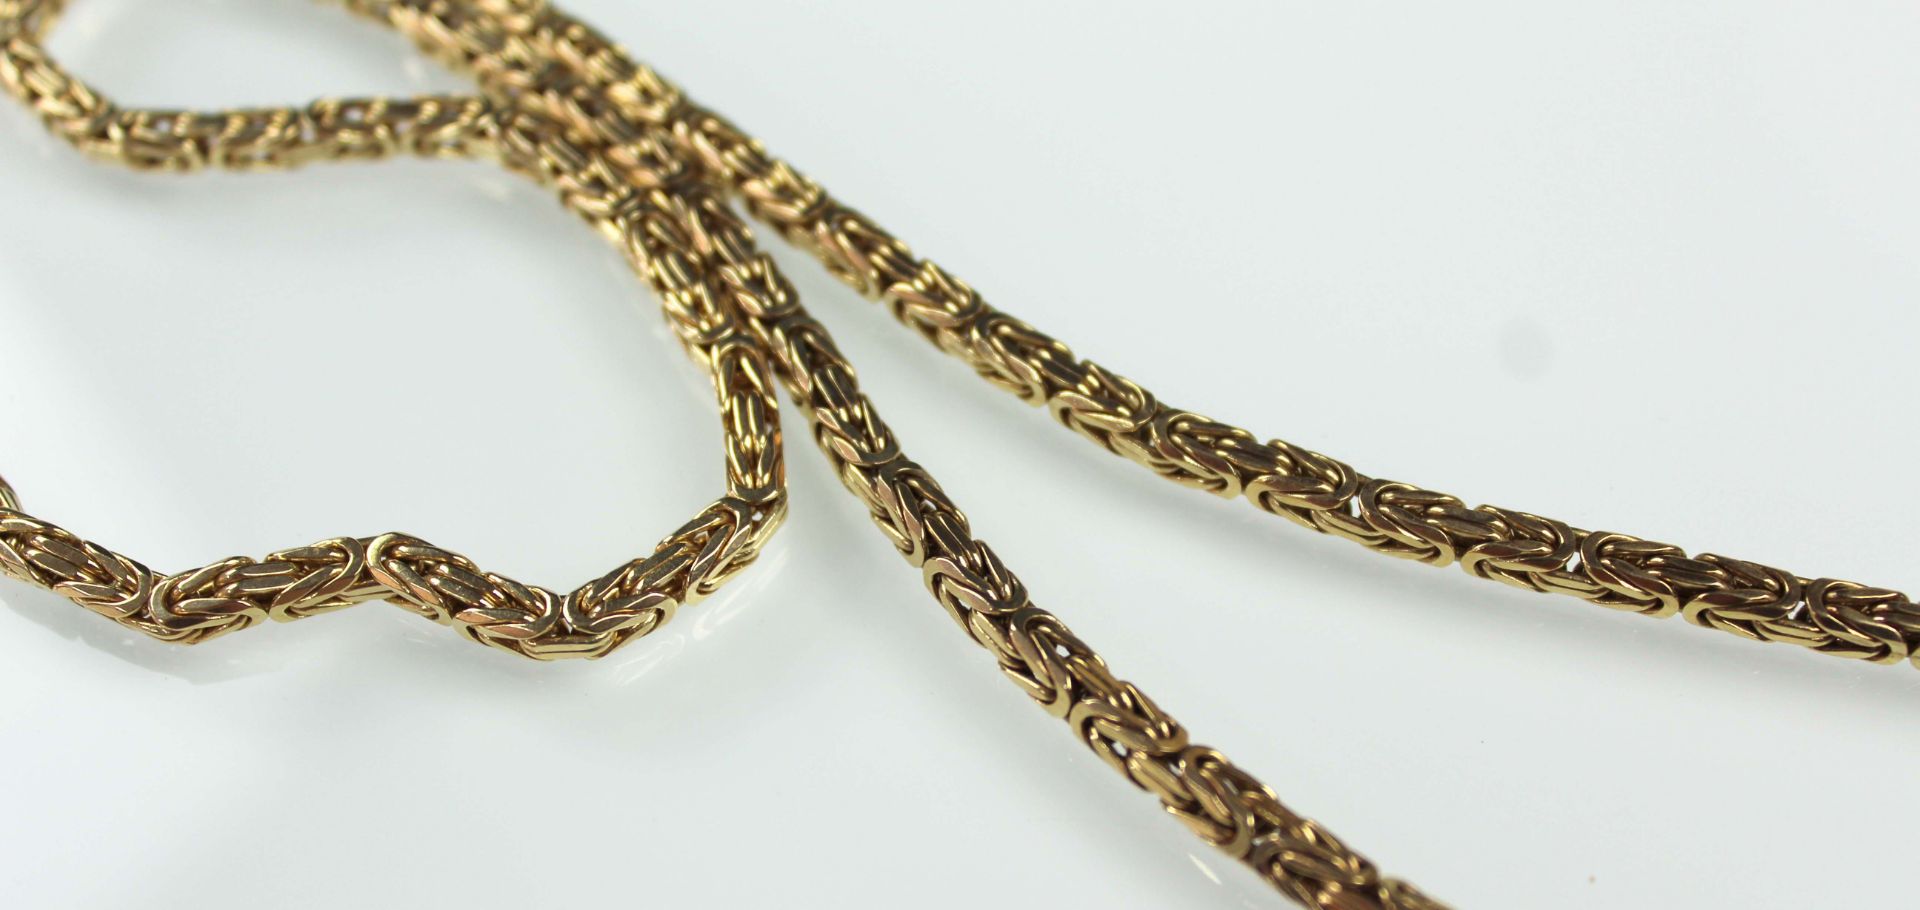 Königskette Gelb Gold 585. 52,6 Gramm. Circa 53 cm lang.Necklace yellow gold 585. 52,6 grams. - Bild 6 aus 11